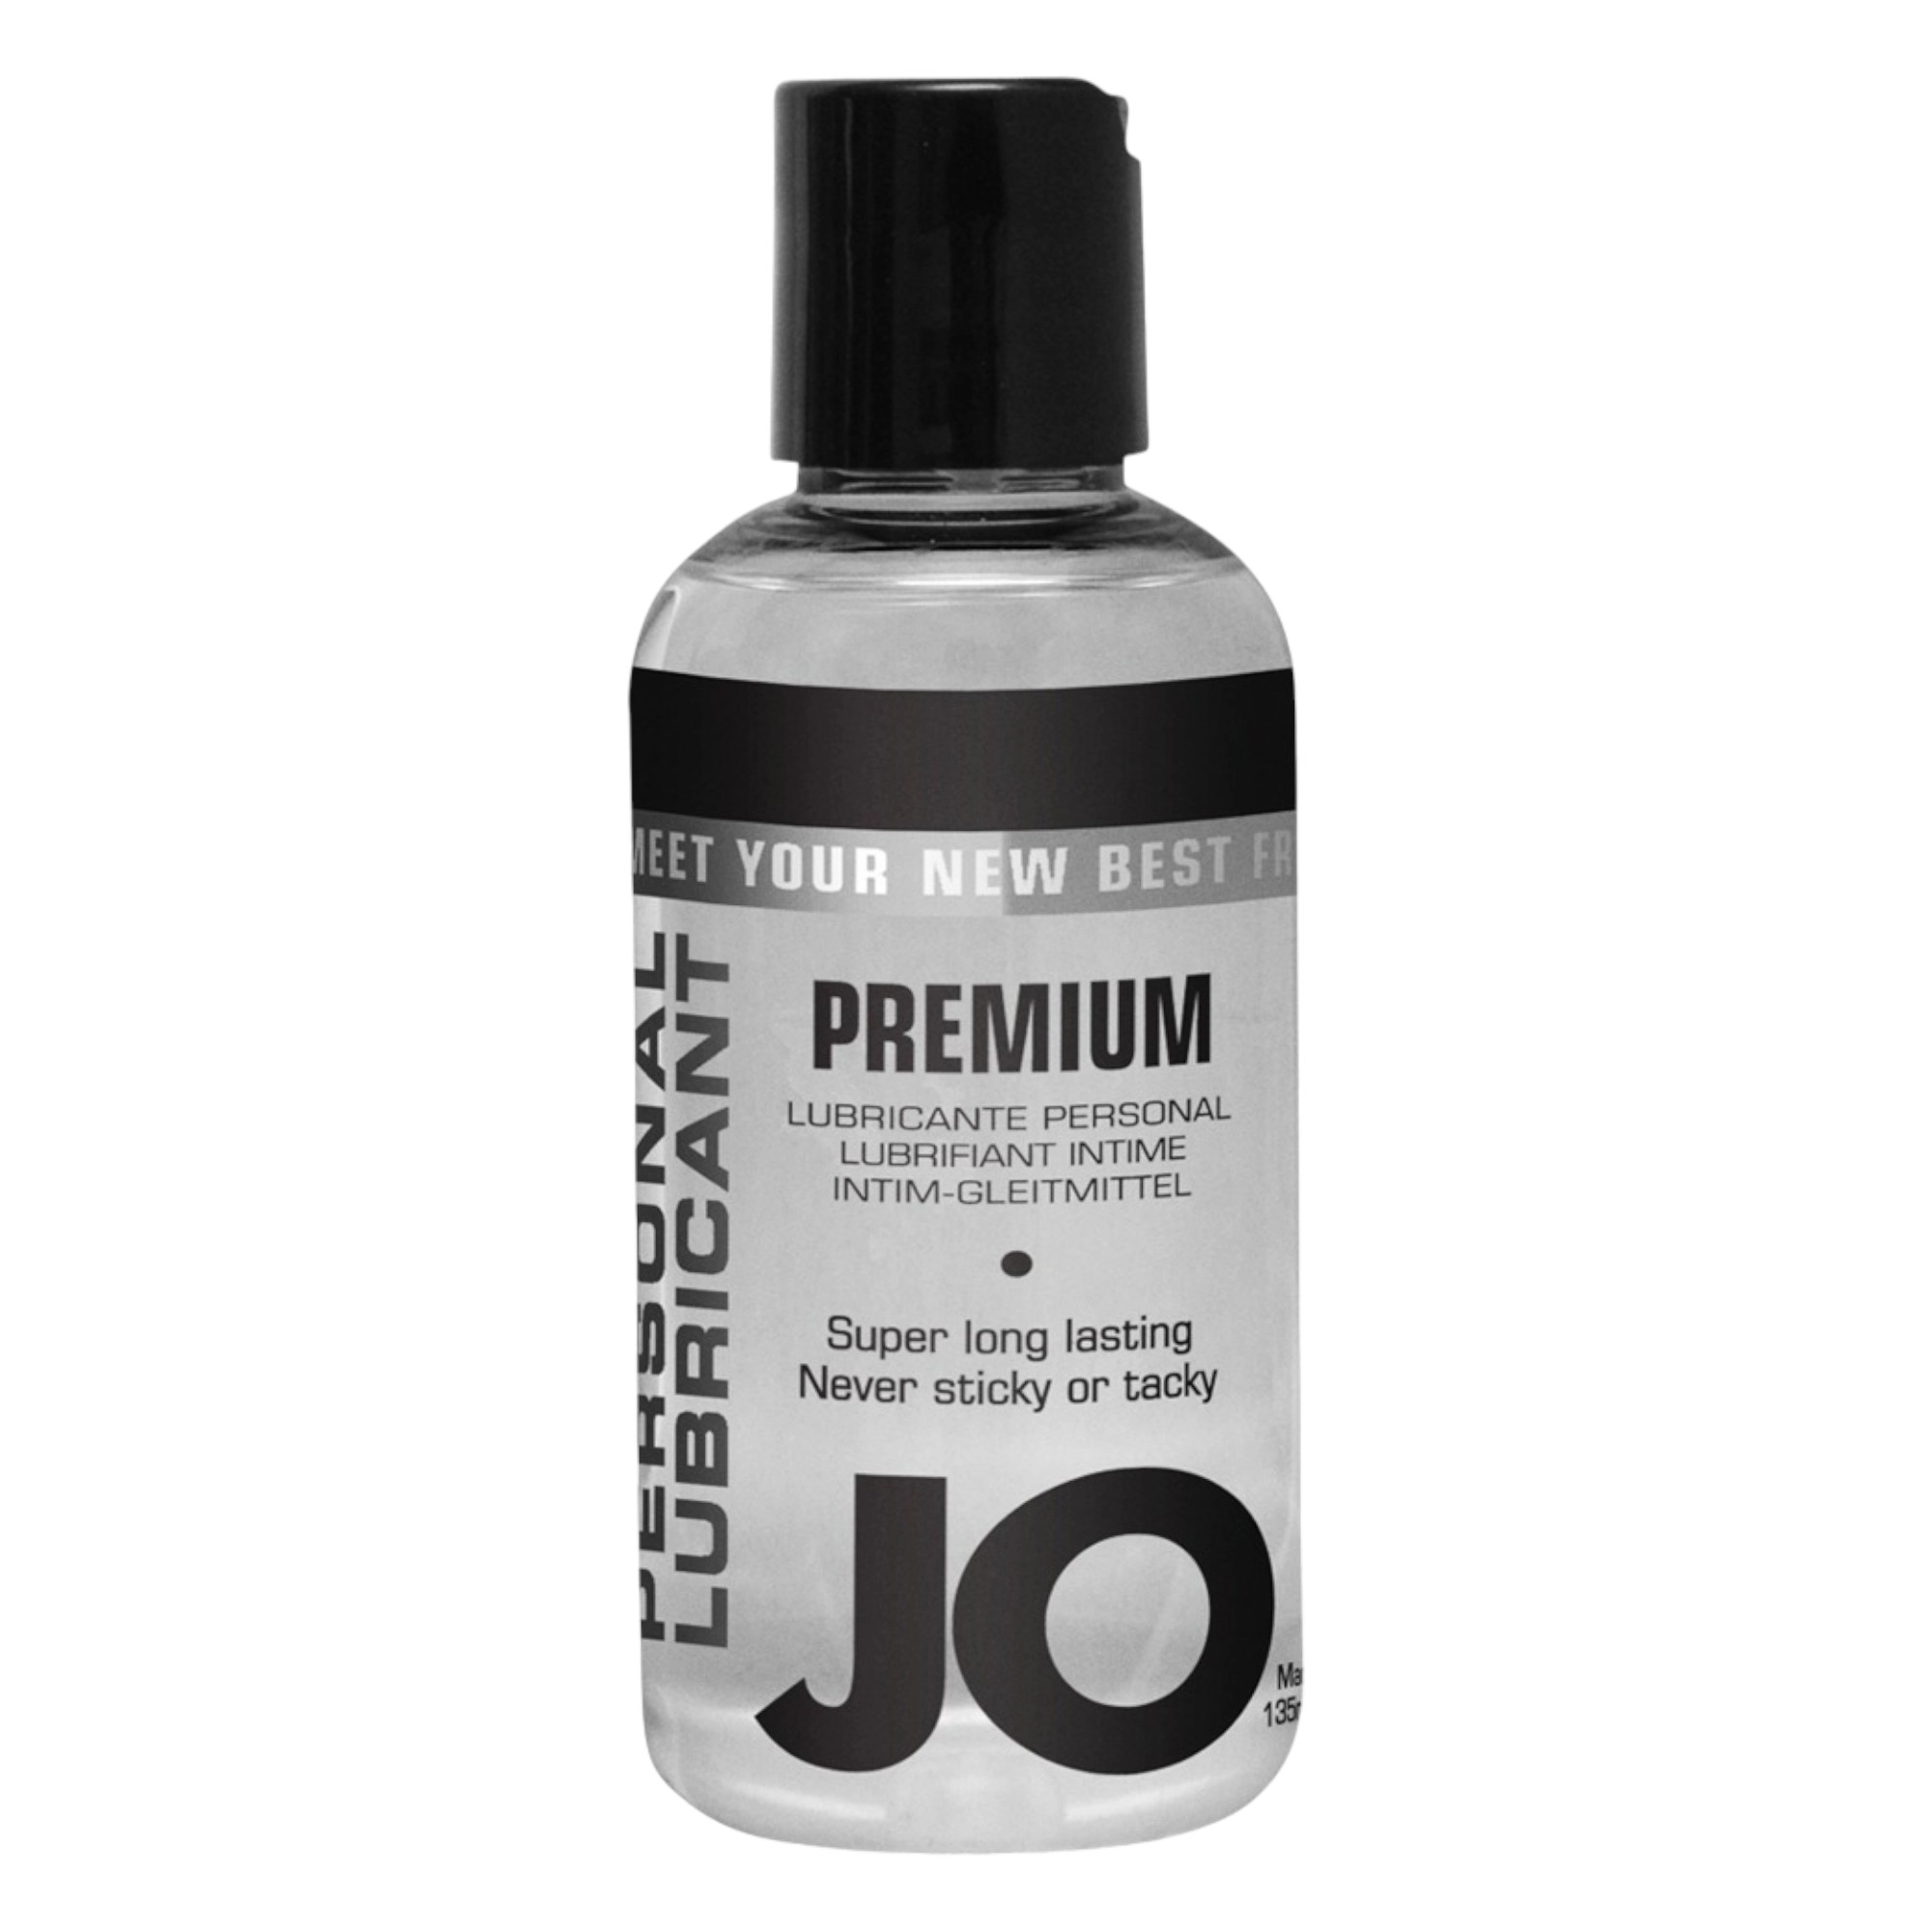 JO Premium silikonový lubrikant (135 ml)